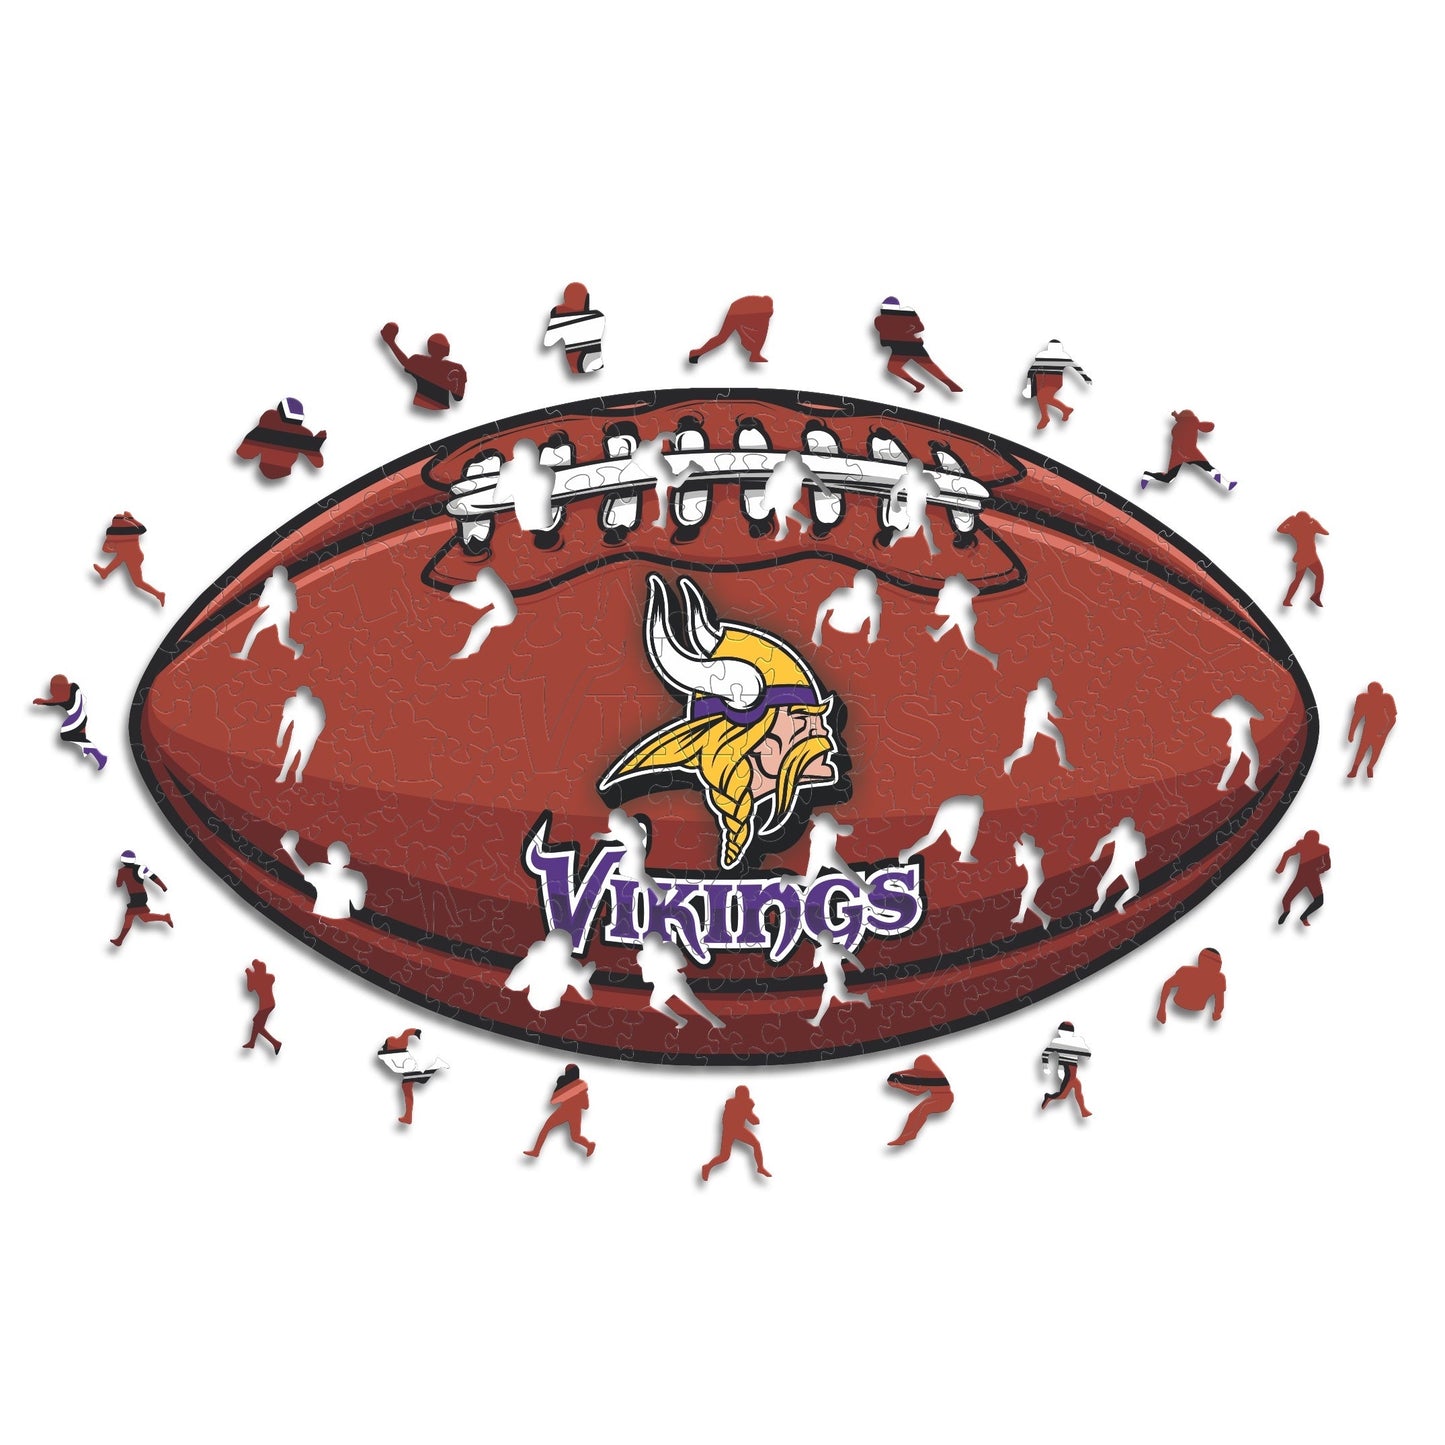 Minnesota Vikings - Wooden Puzzle